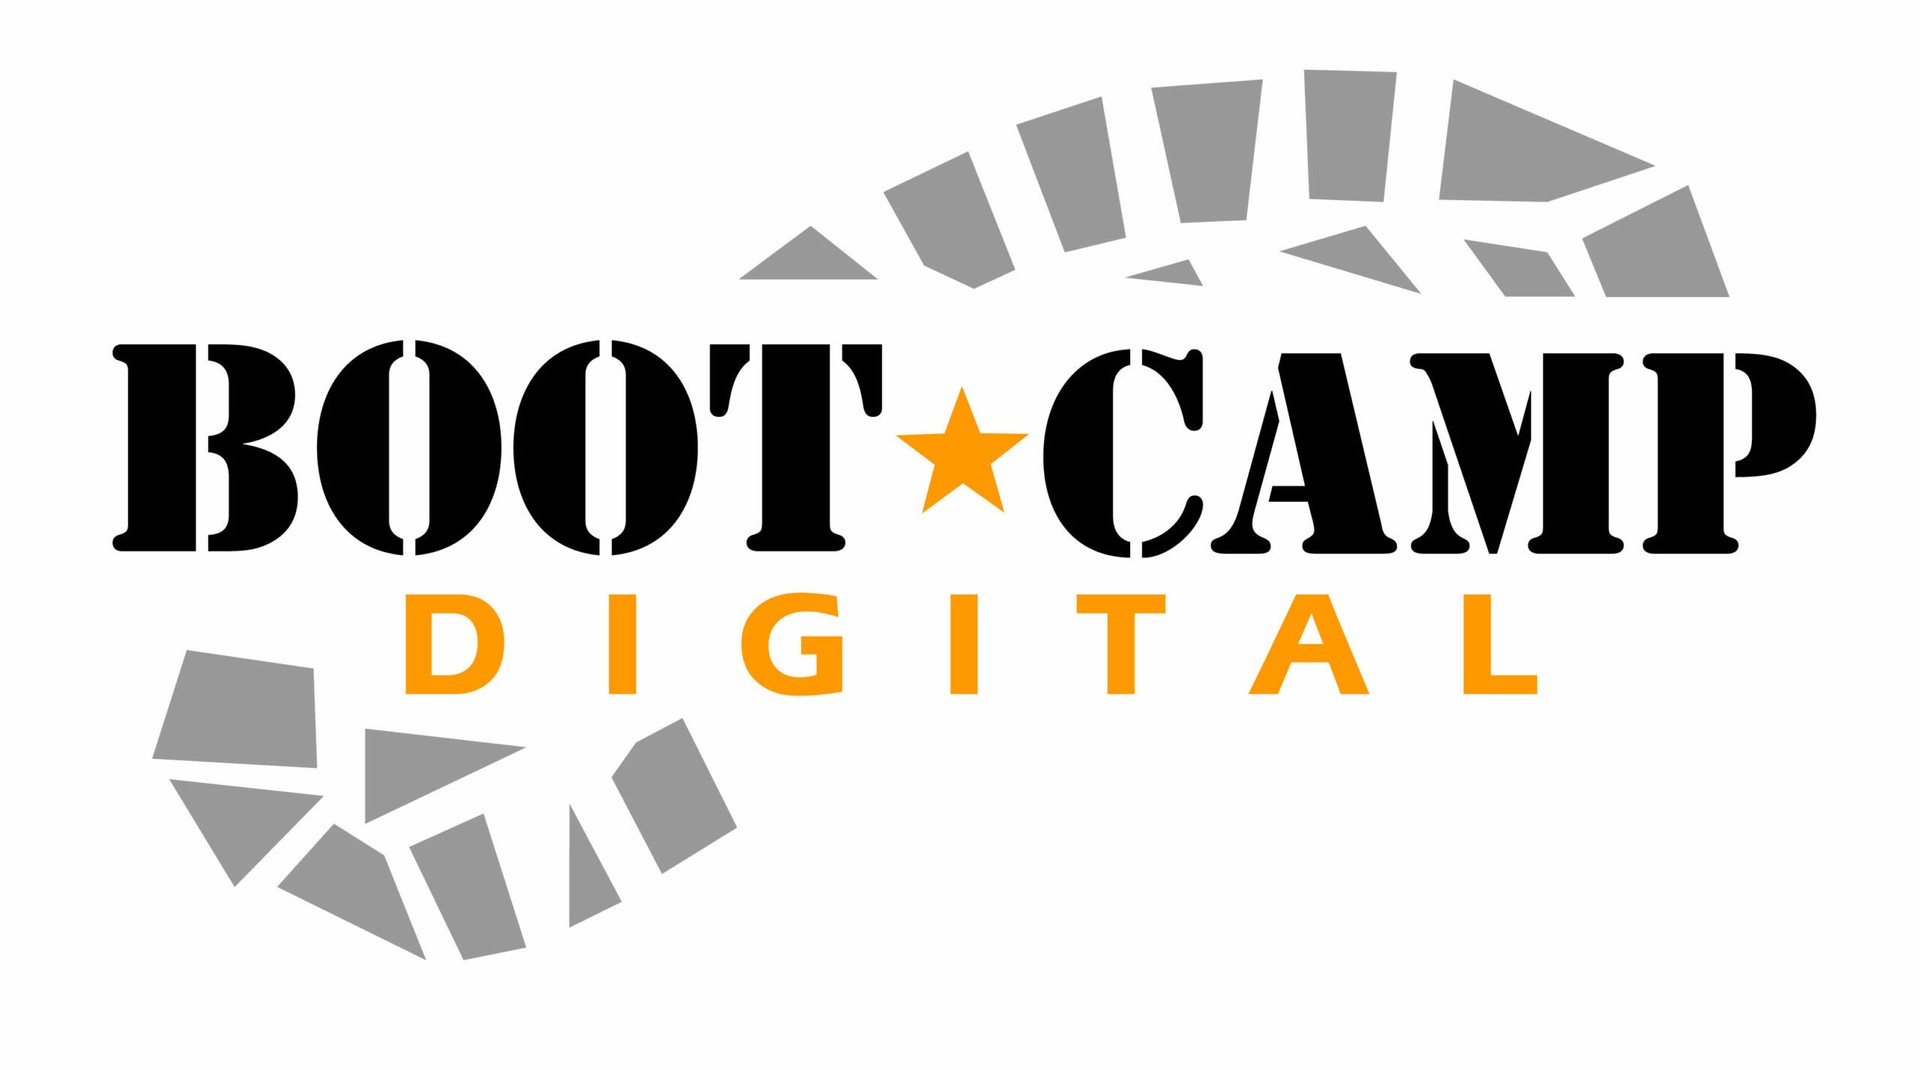 Digital marketing courses in Jaipur - Bootcamp logo